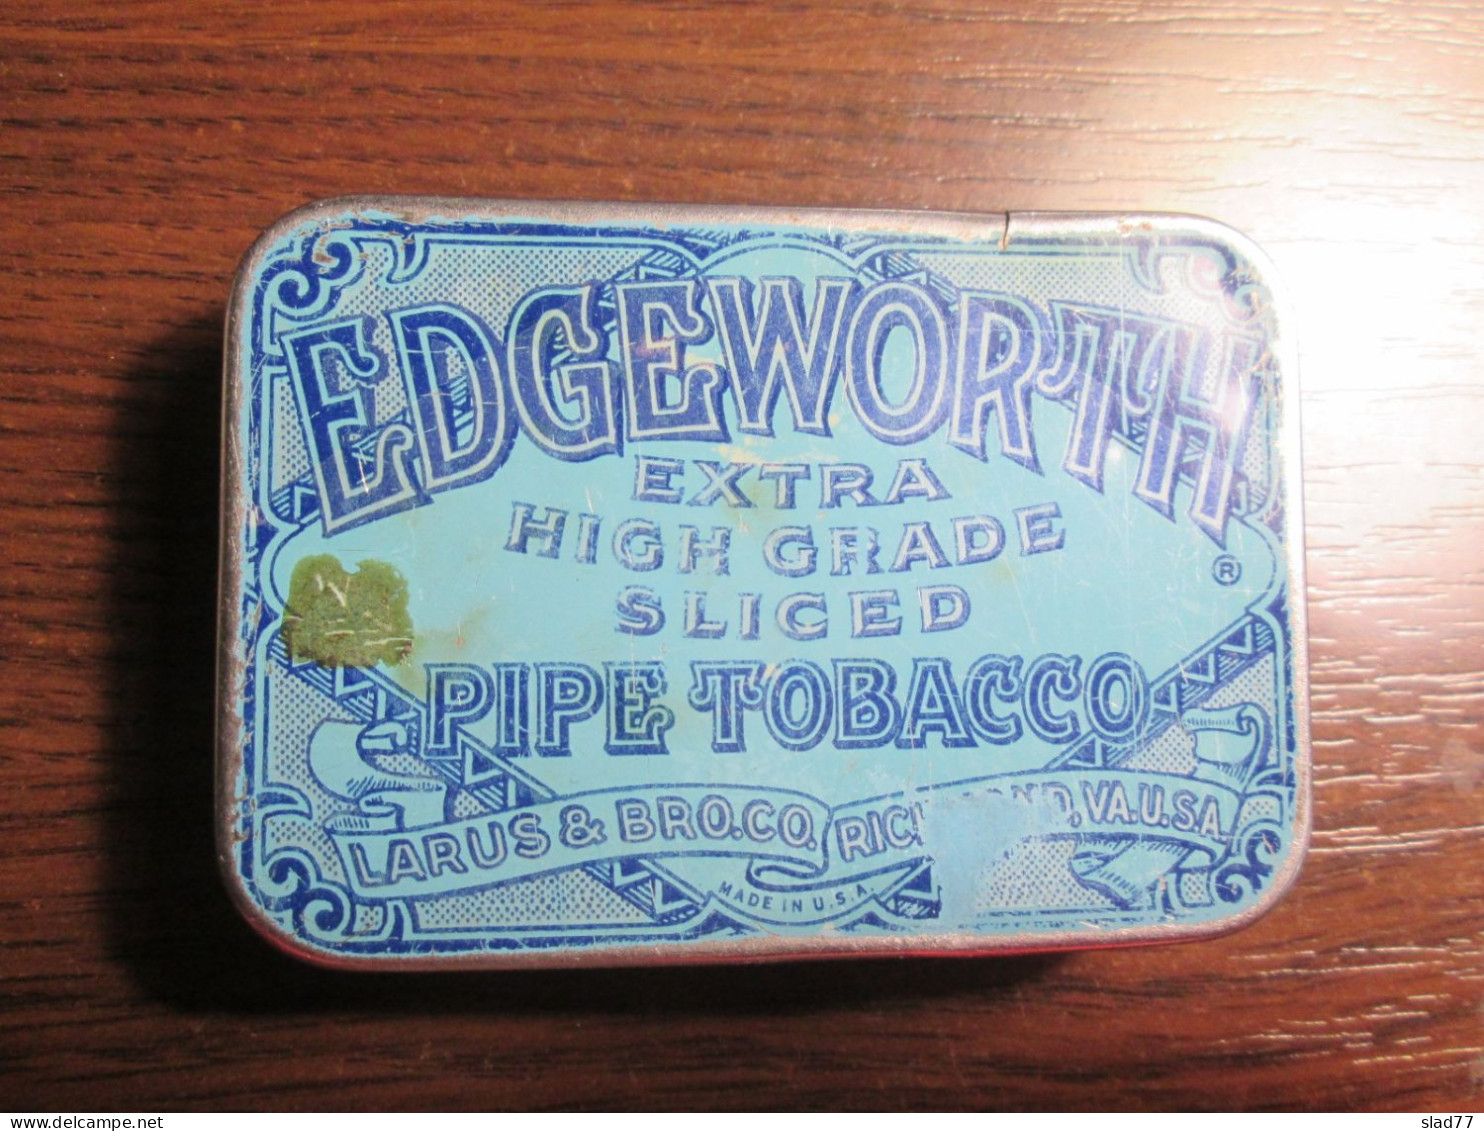 Vintage EDGEWORTH PipeTobacco Tin Box - Empty Tobacco Boxes